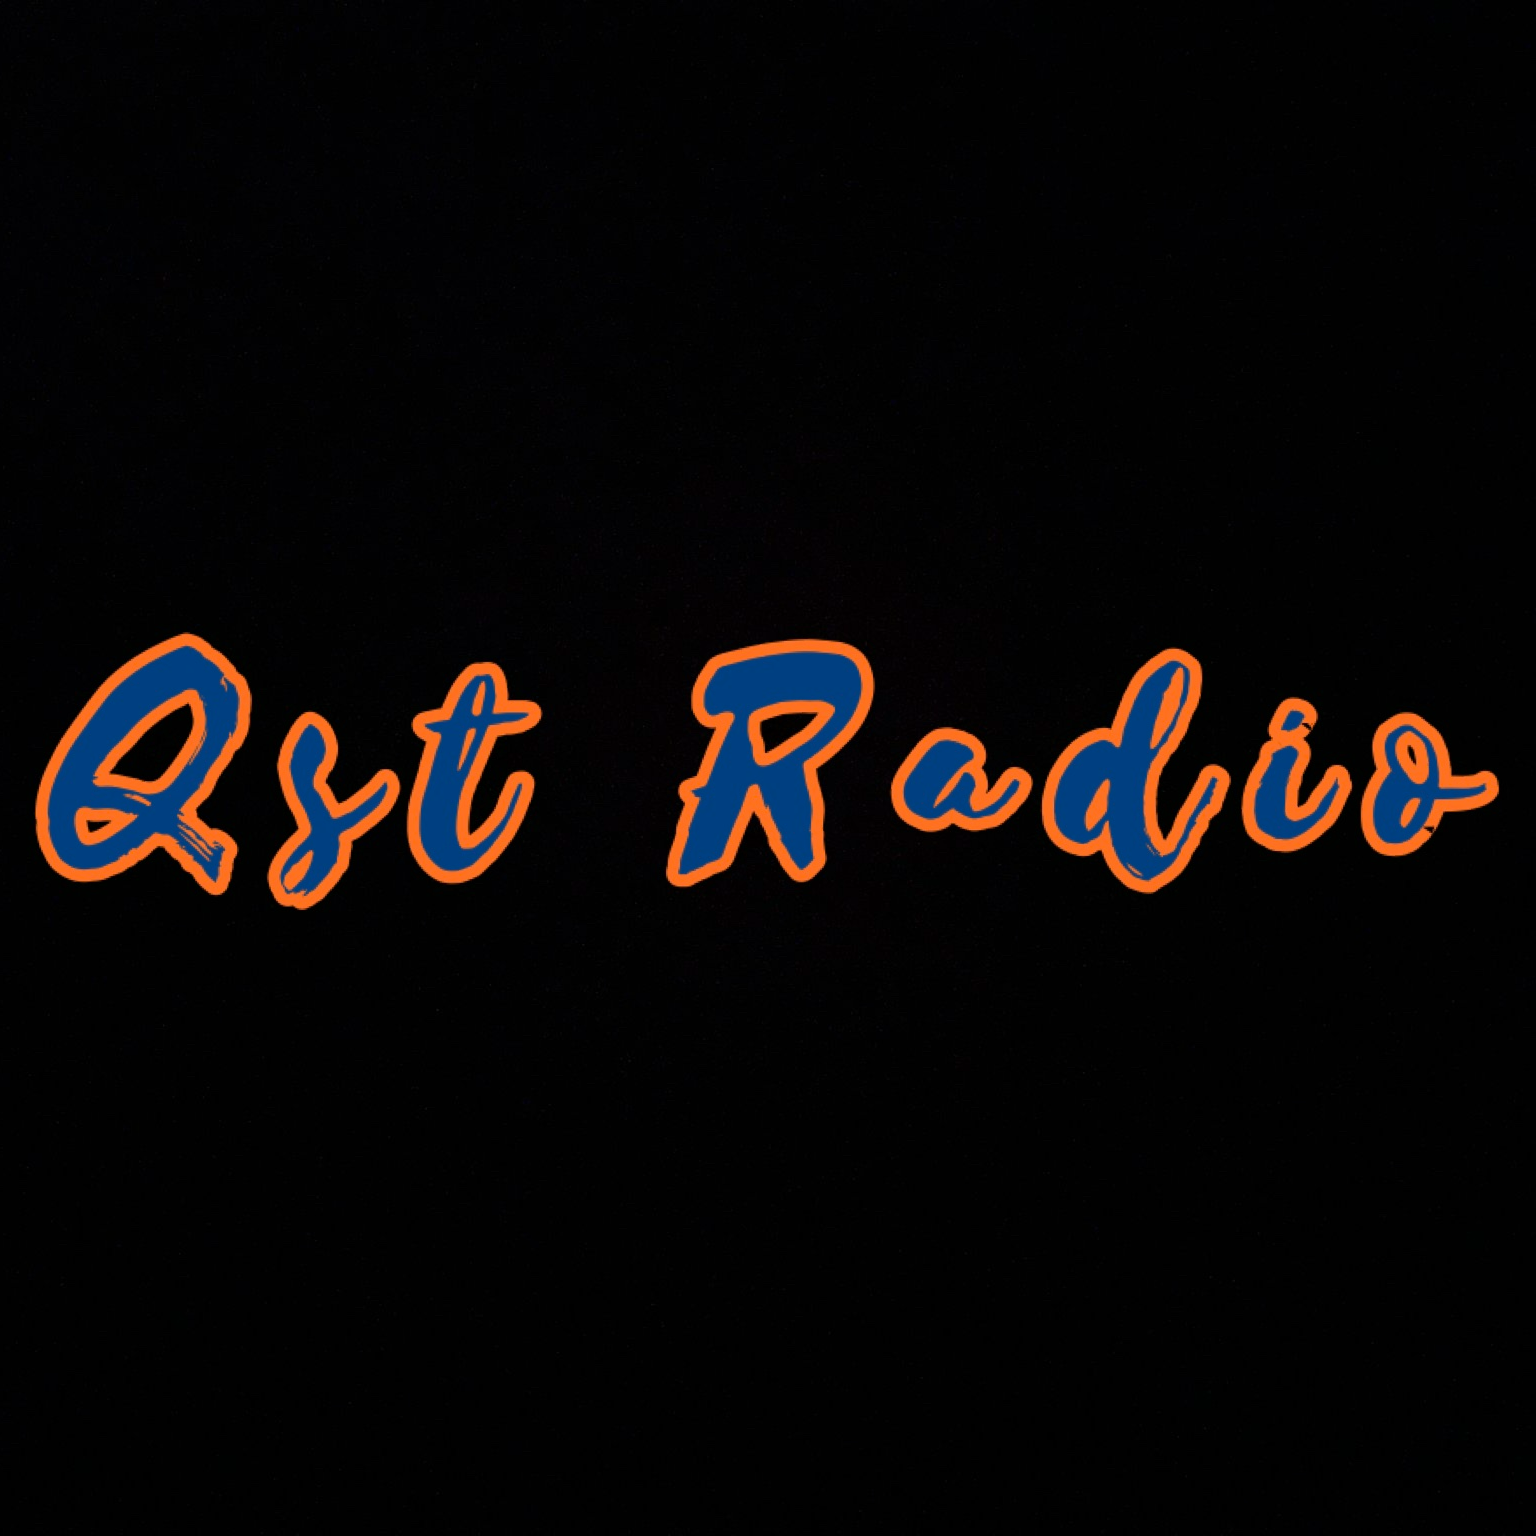 Qst Radio